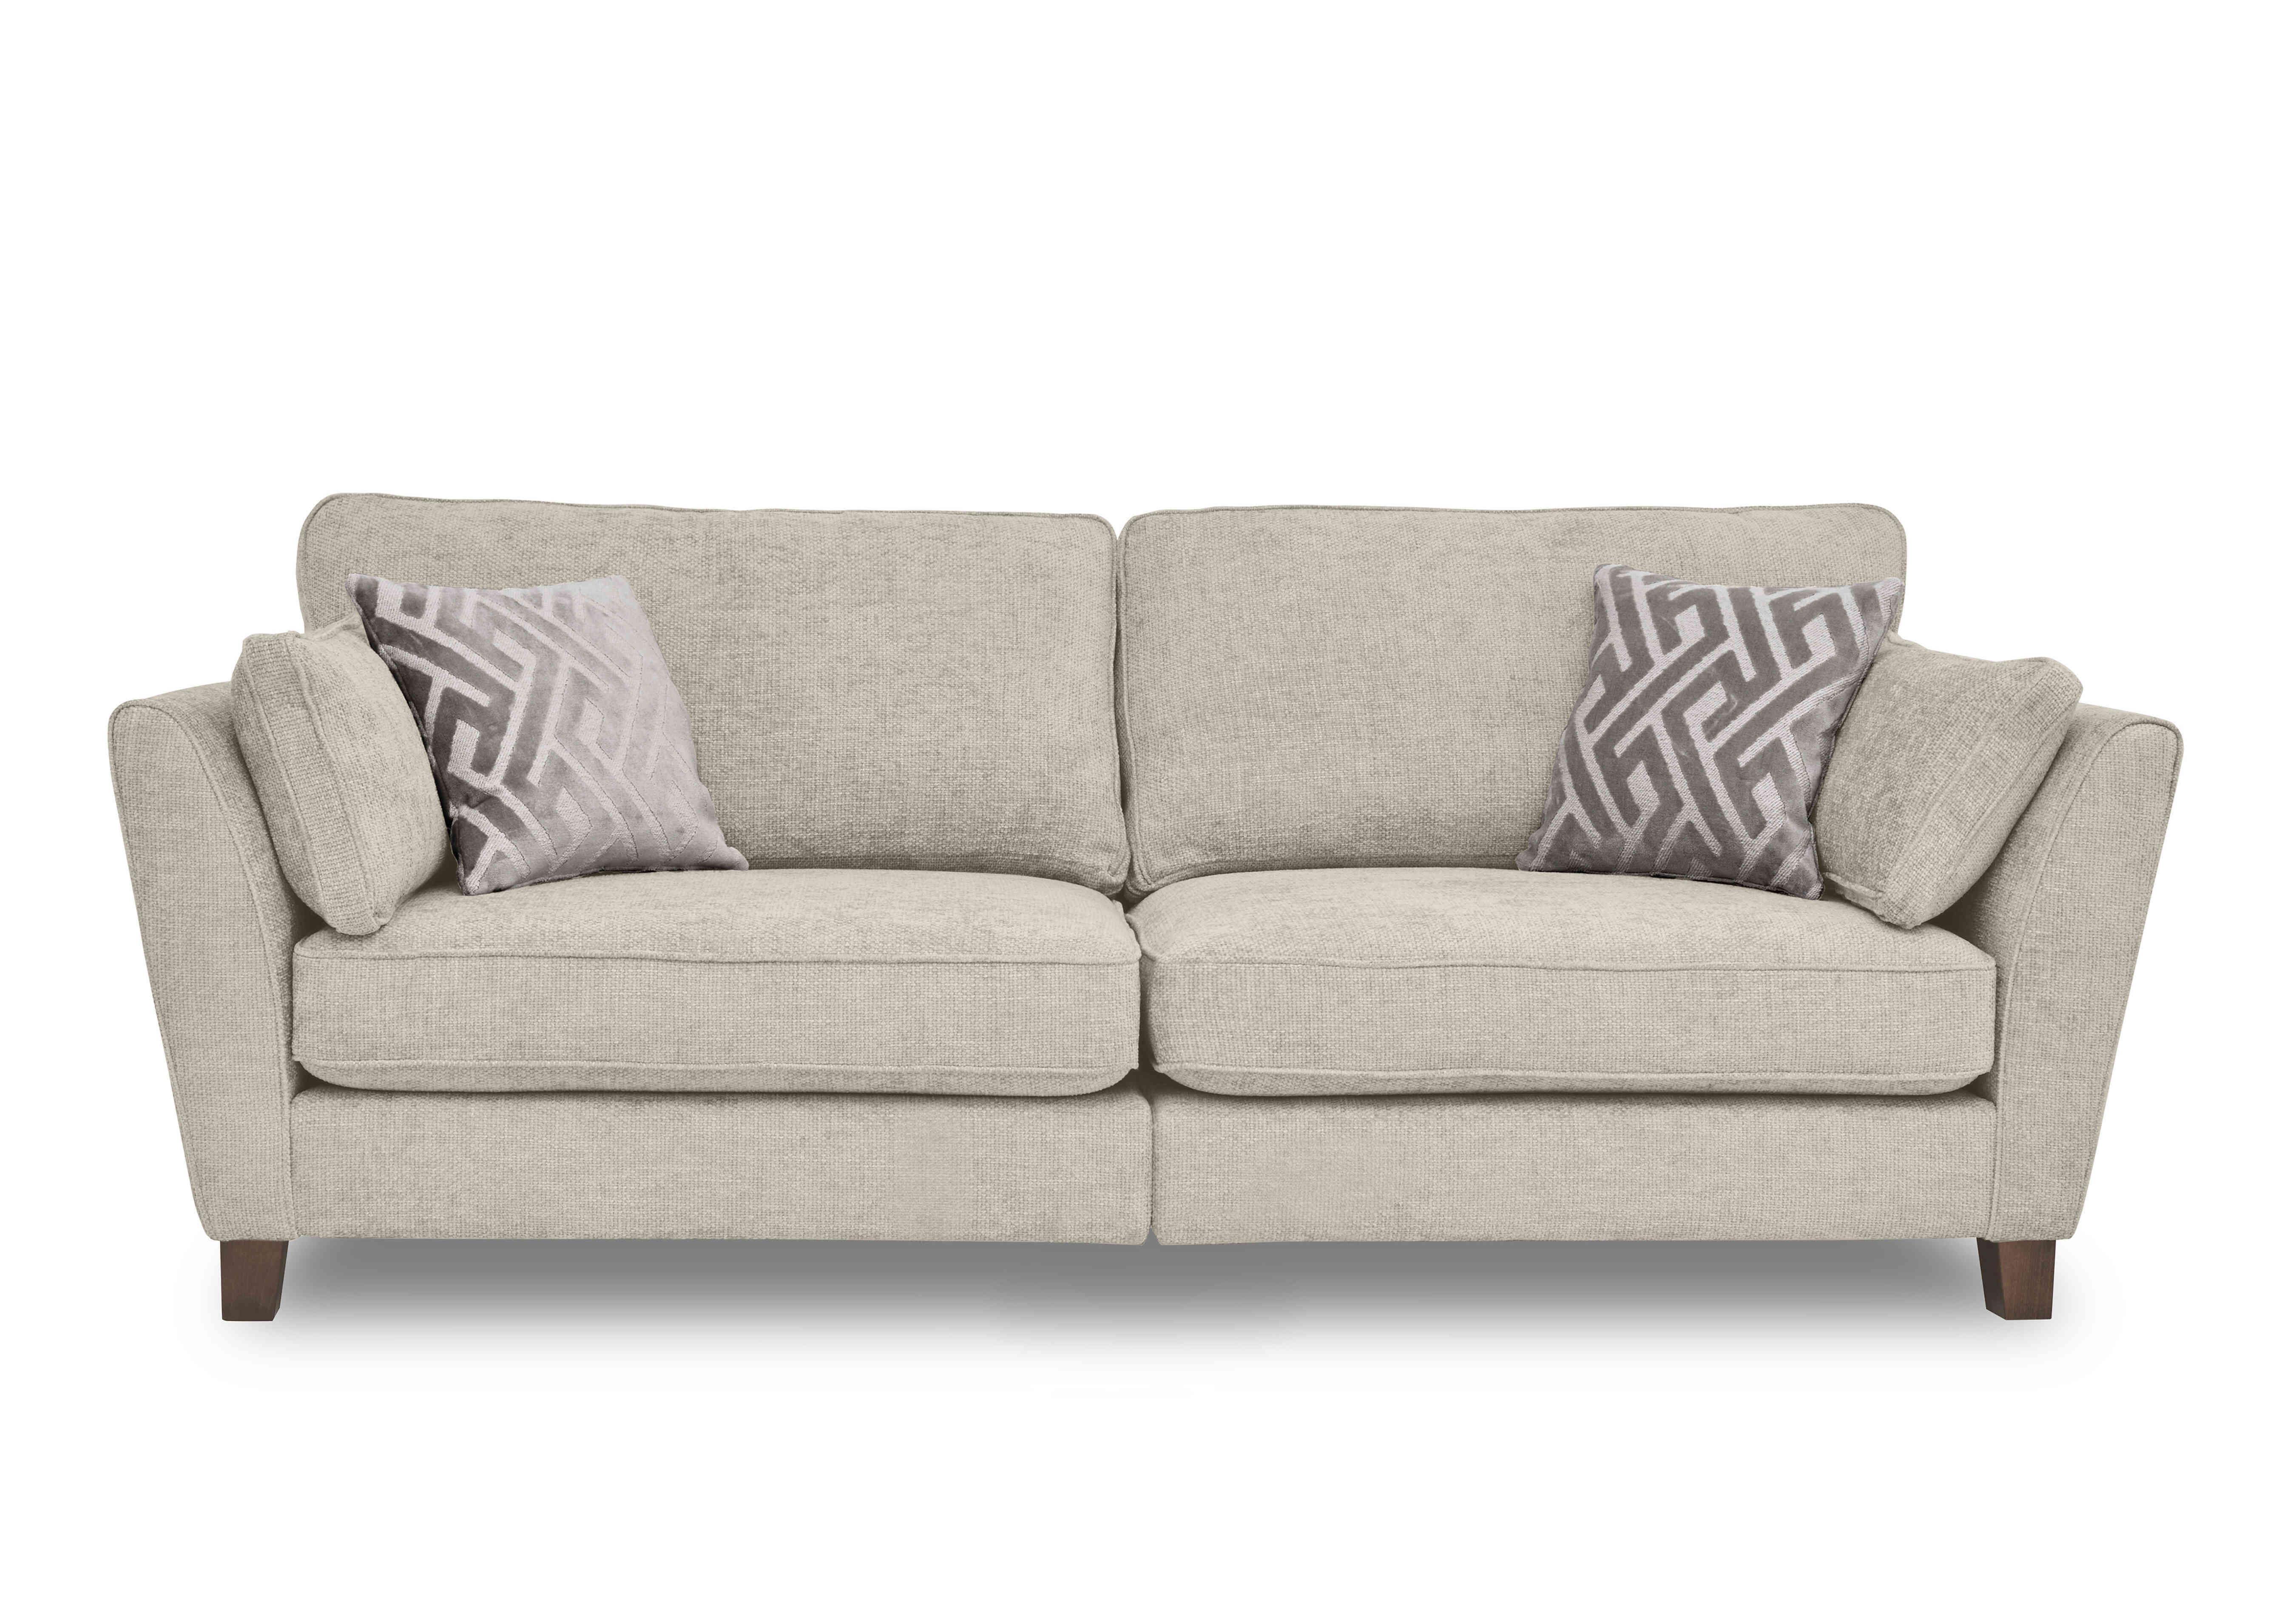 Tabitha 4 Seater Split Frame Sofa in Cream on Furniture Village